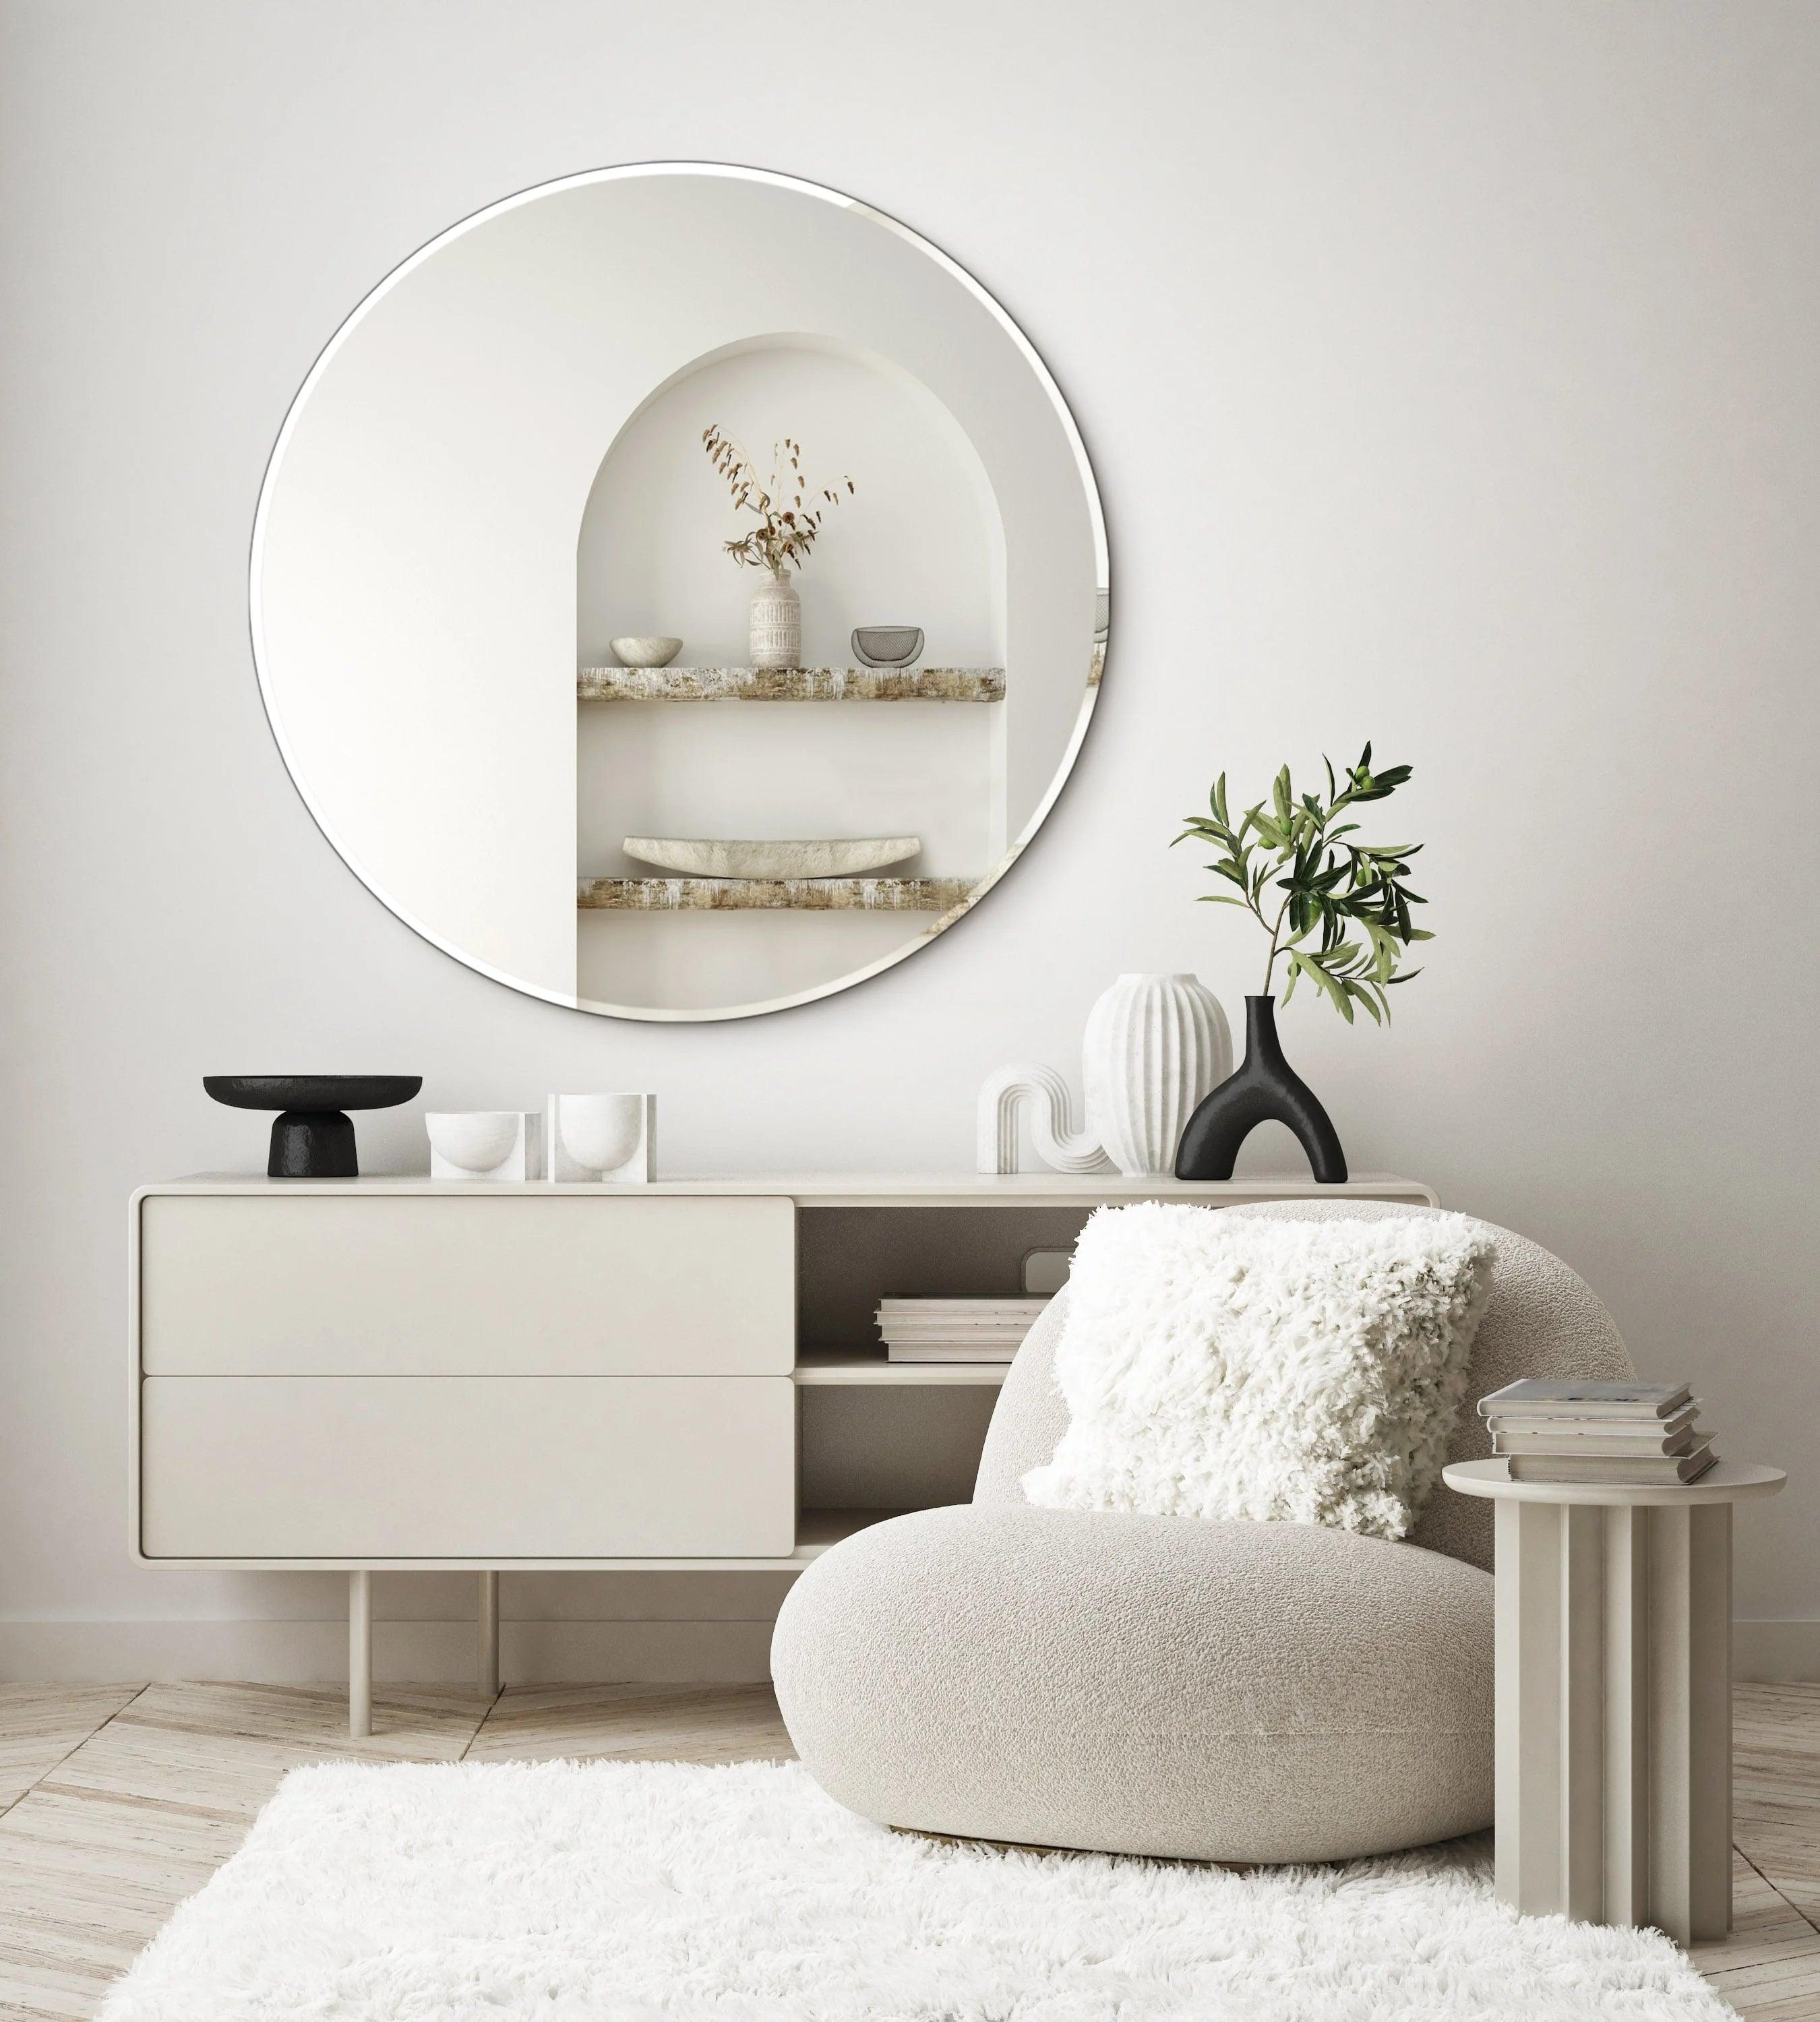 Aurum mirror no. 2 | XL - Blossholm